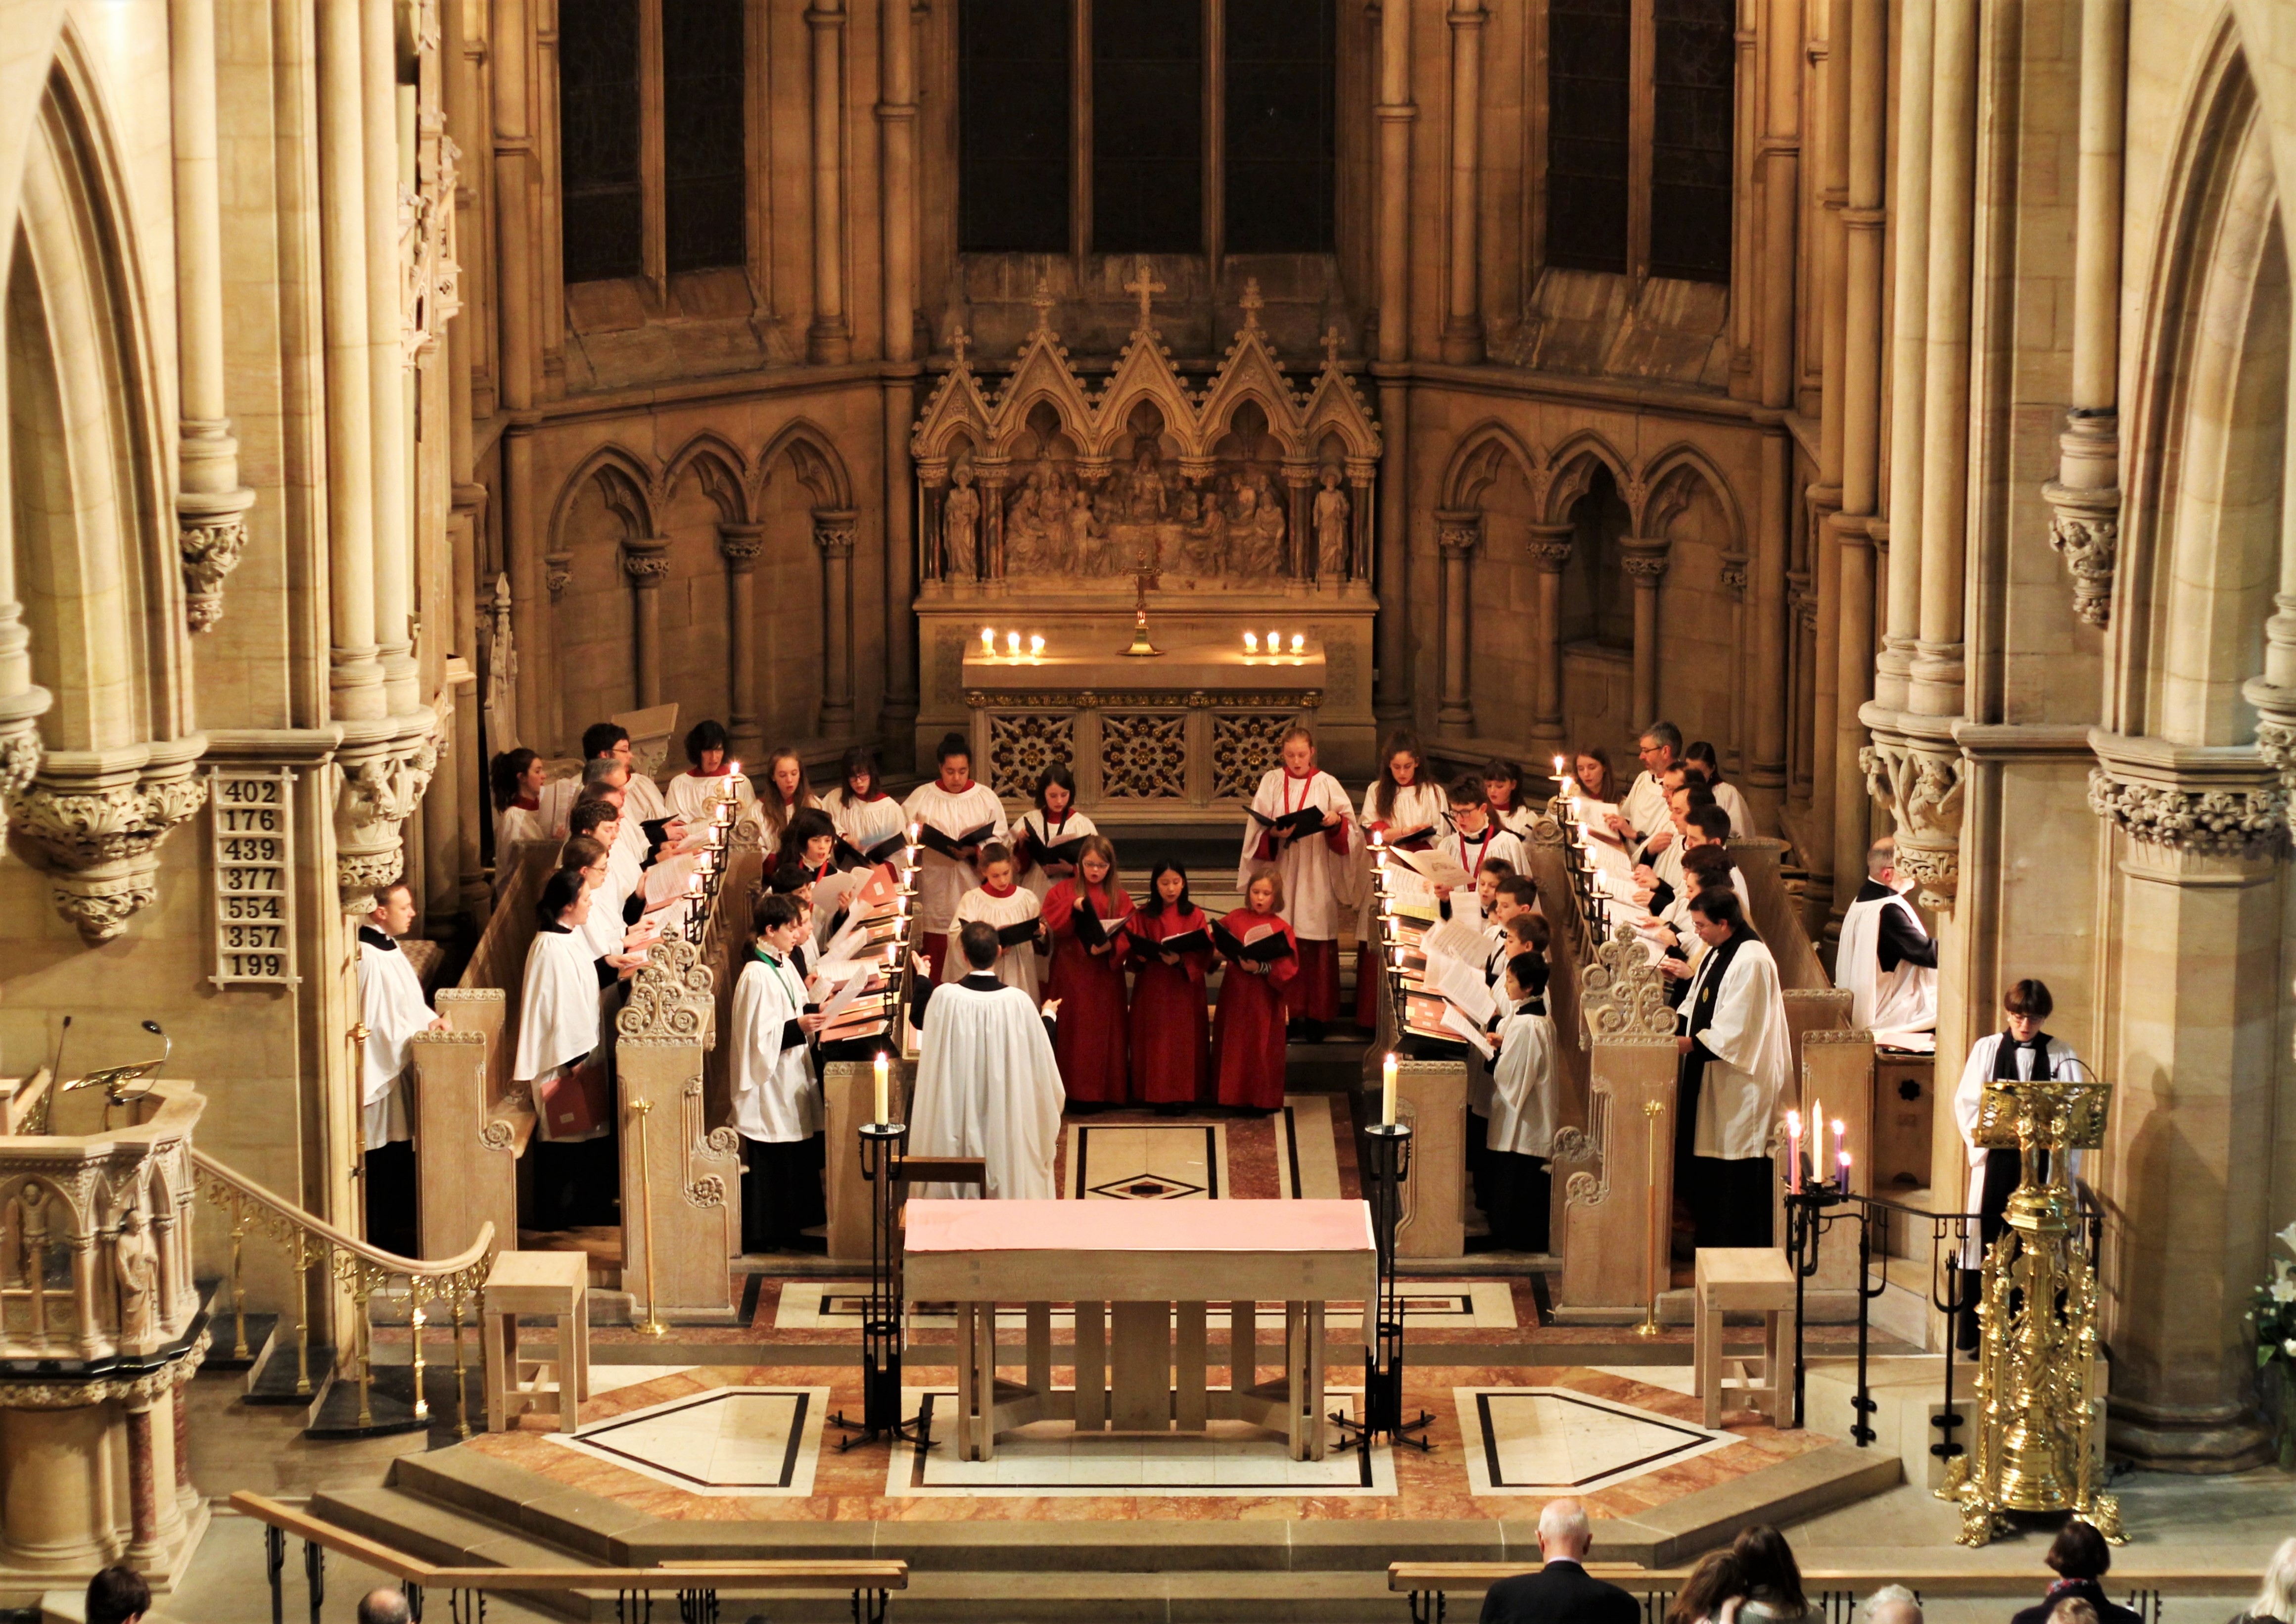 choir image for website